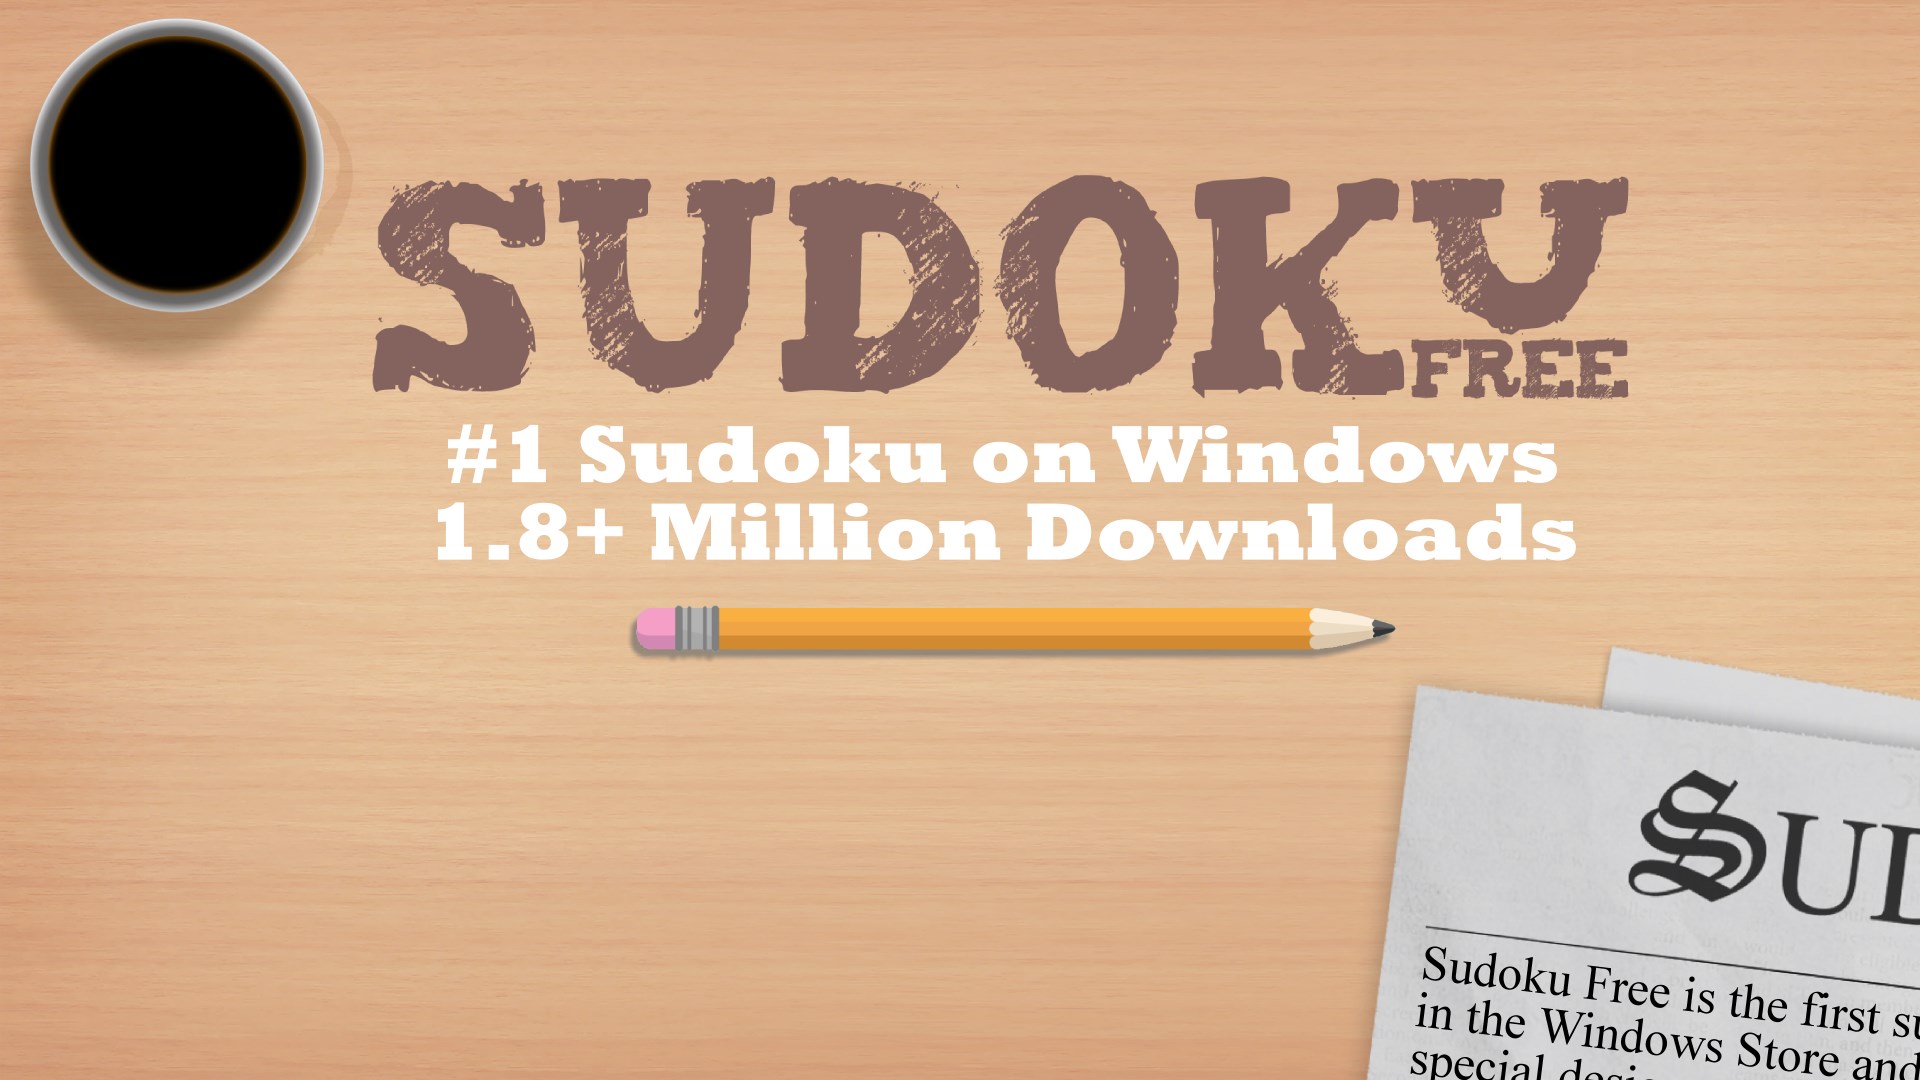 Get Sudoku Free Microsoft Store